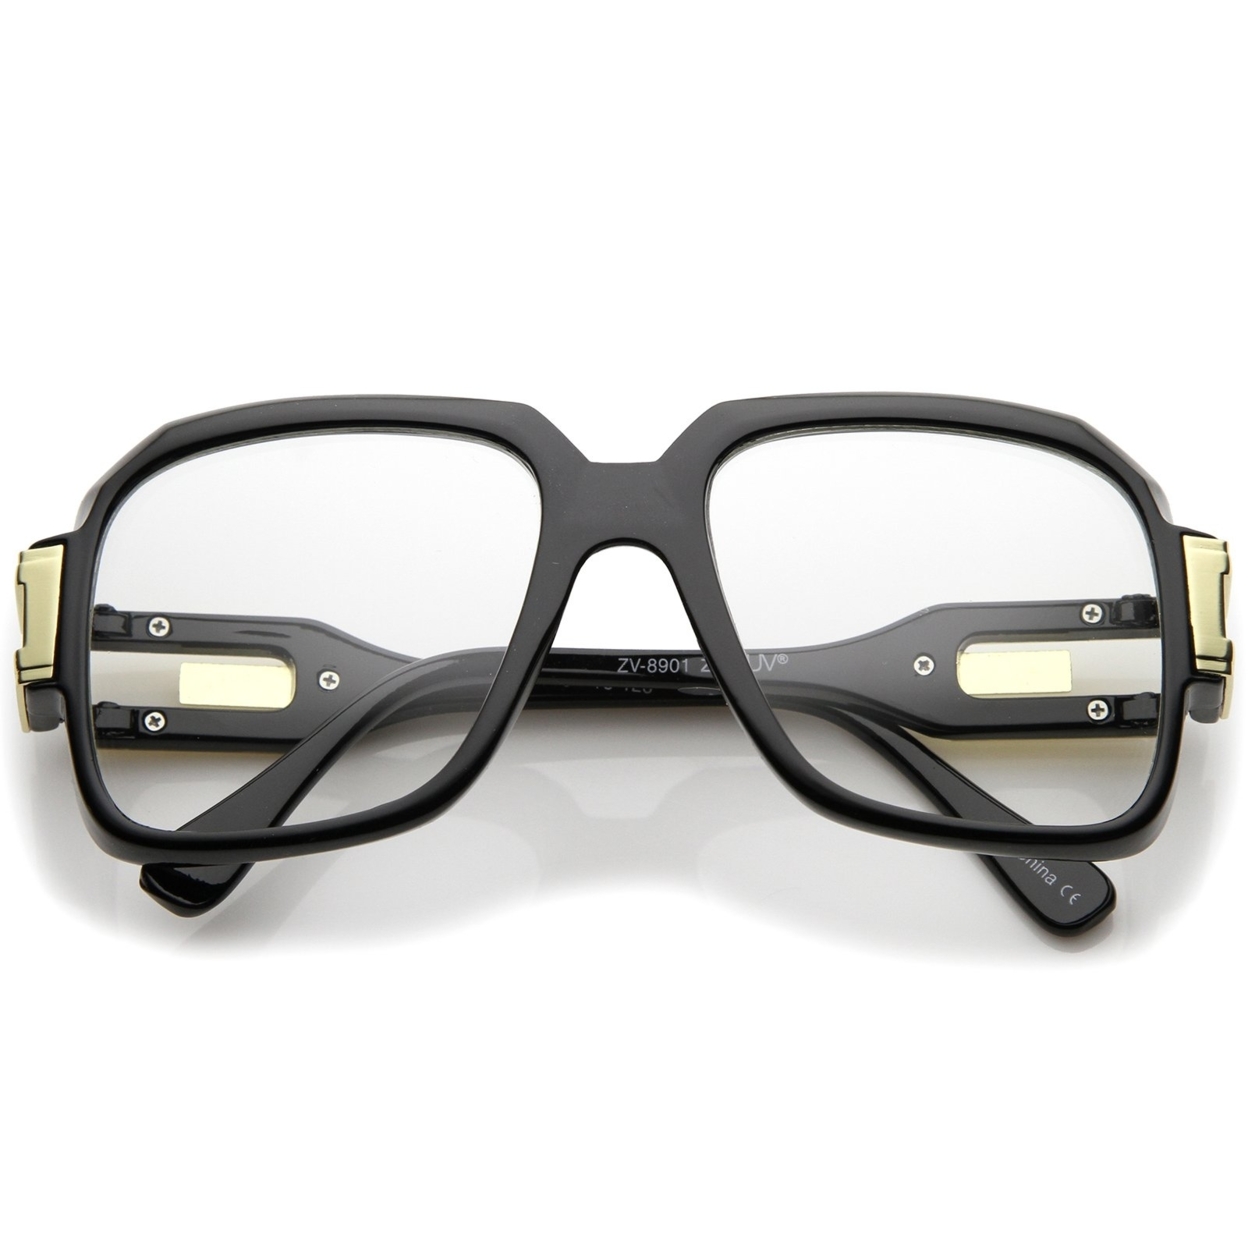 Large Retro Hip Hop Style Clear Lens Square Eyeglasses 54mm - Matte Black-Silver / Clear